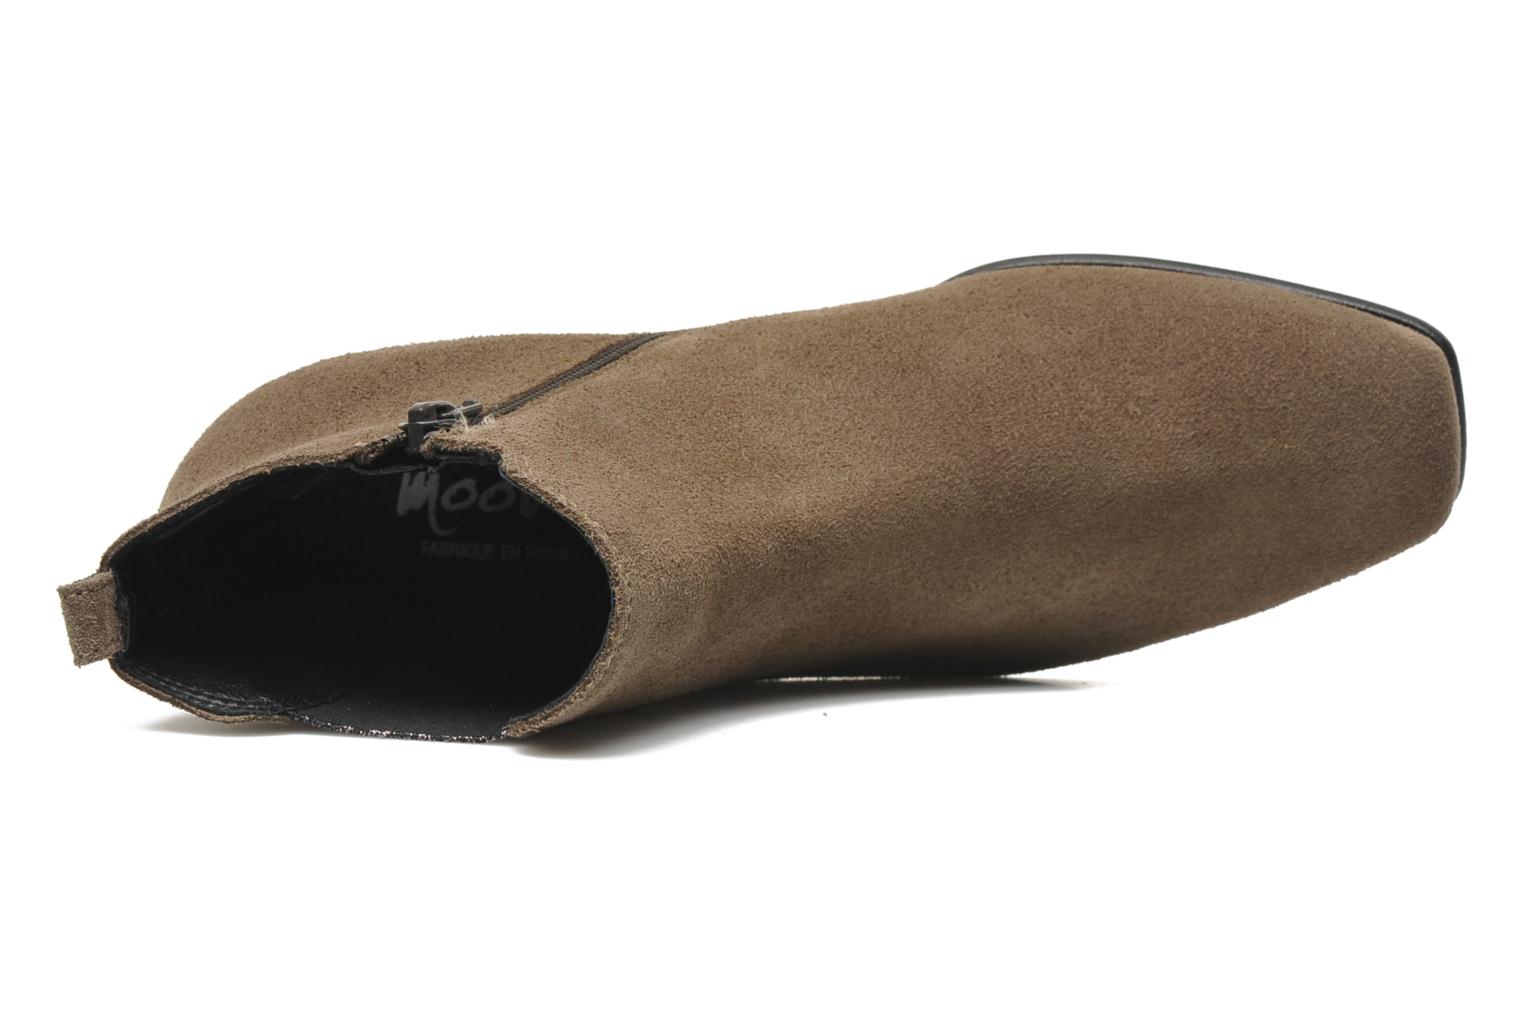 Moova Sentos (Brown) - Ankle boots chez Sarenza (146387)